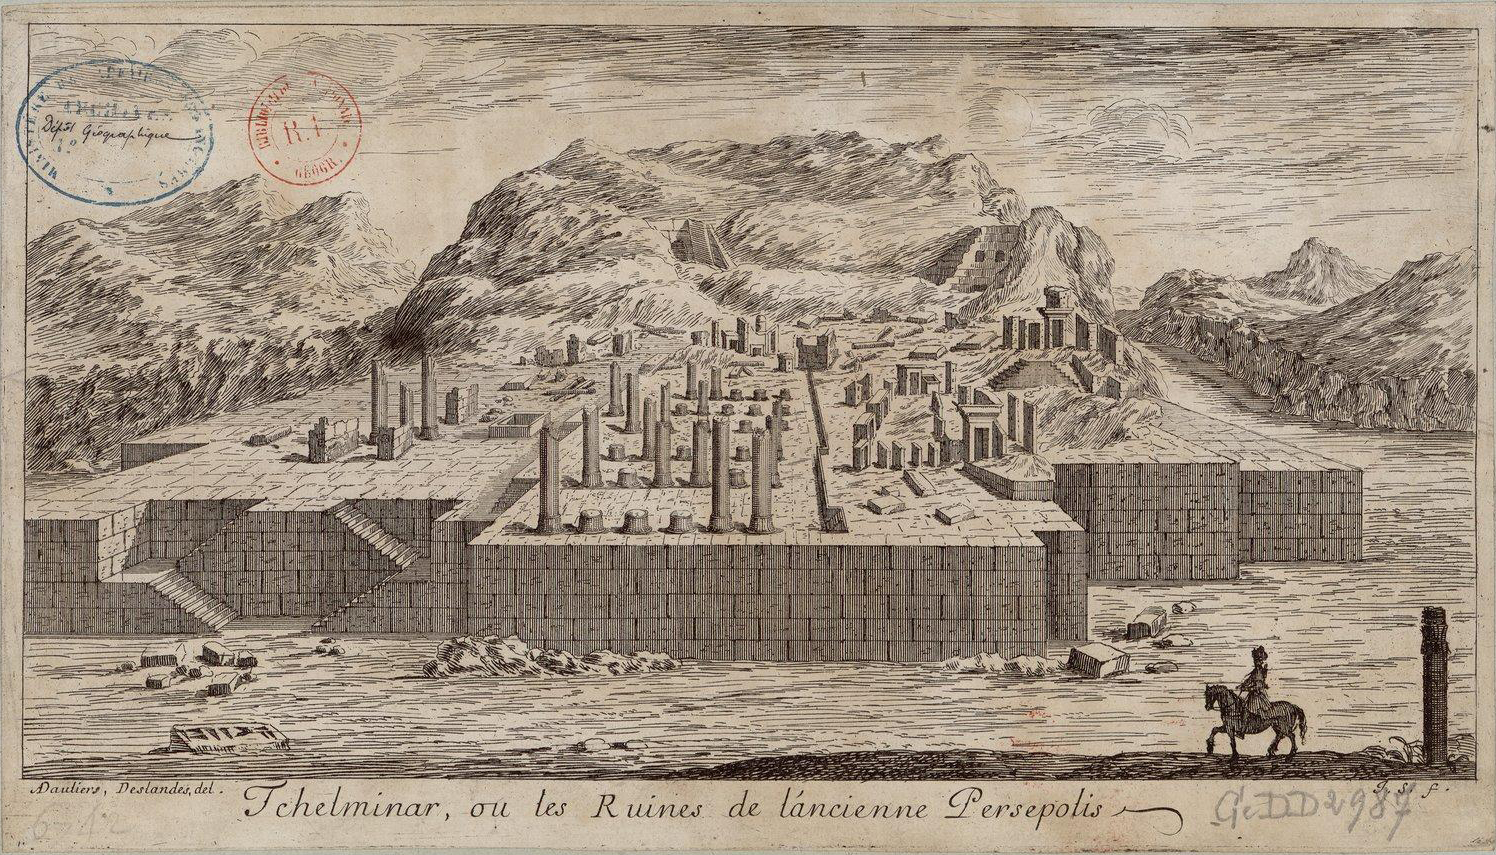 Israël Silvestre : Tchelminar, ou les Ruines de l'ancienne Persépolis.